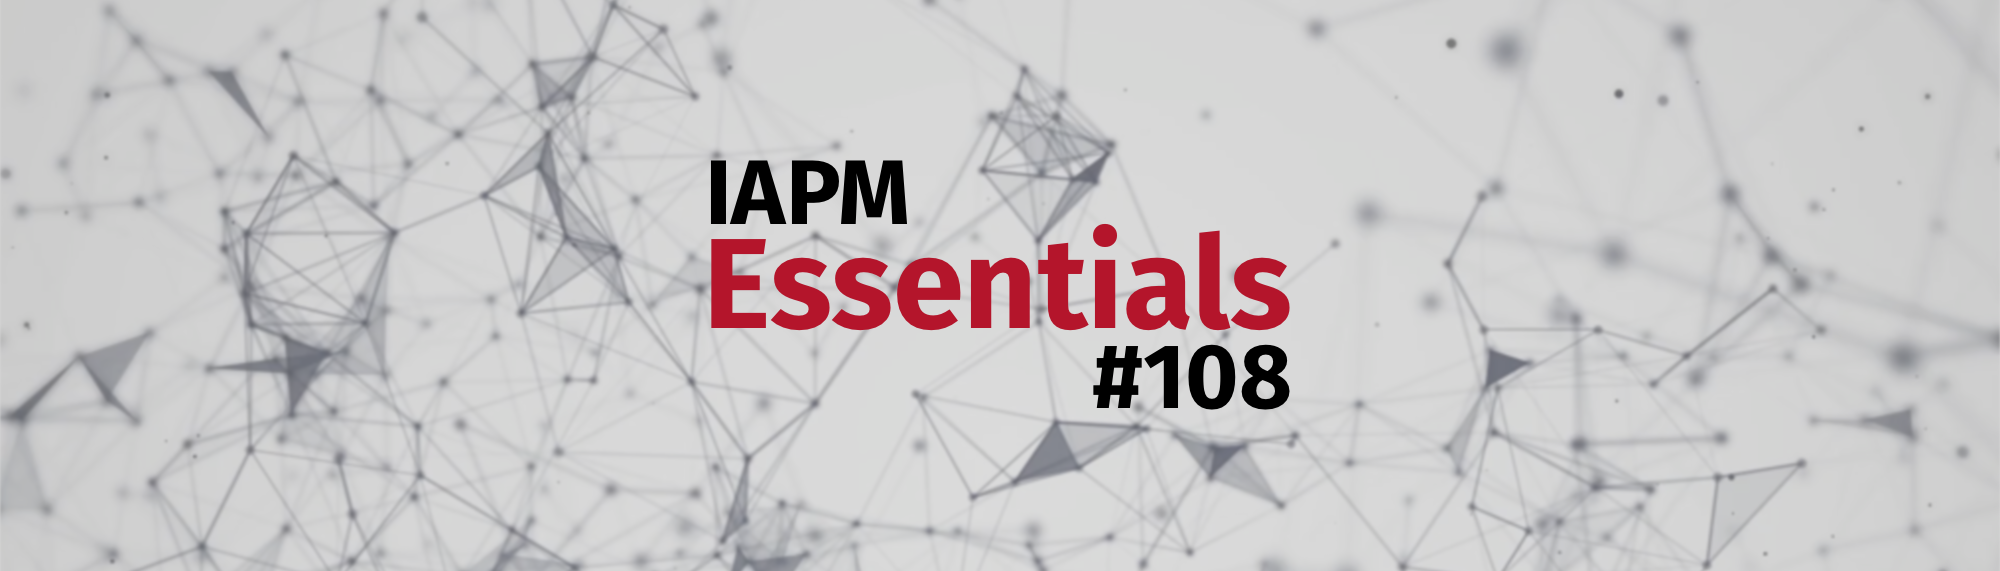 IAPM Essentials #108 - PM Neuigkeiten | IAPM